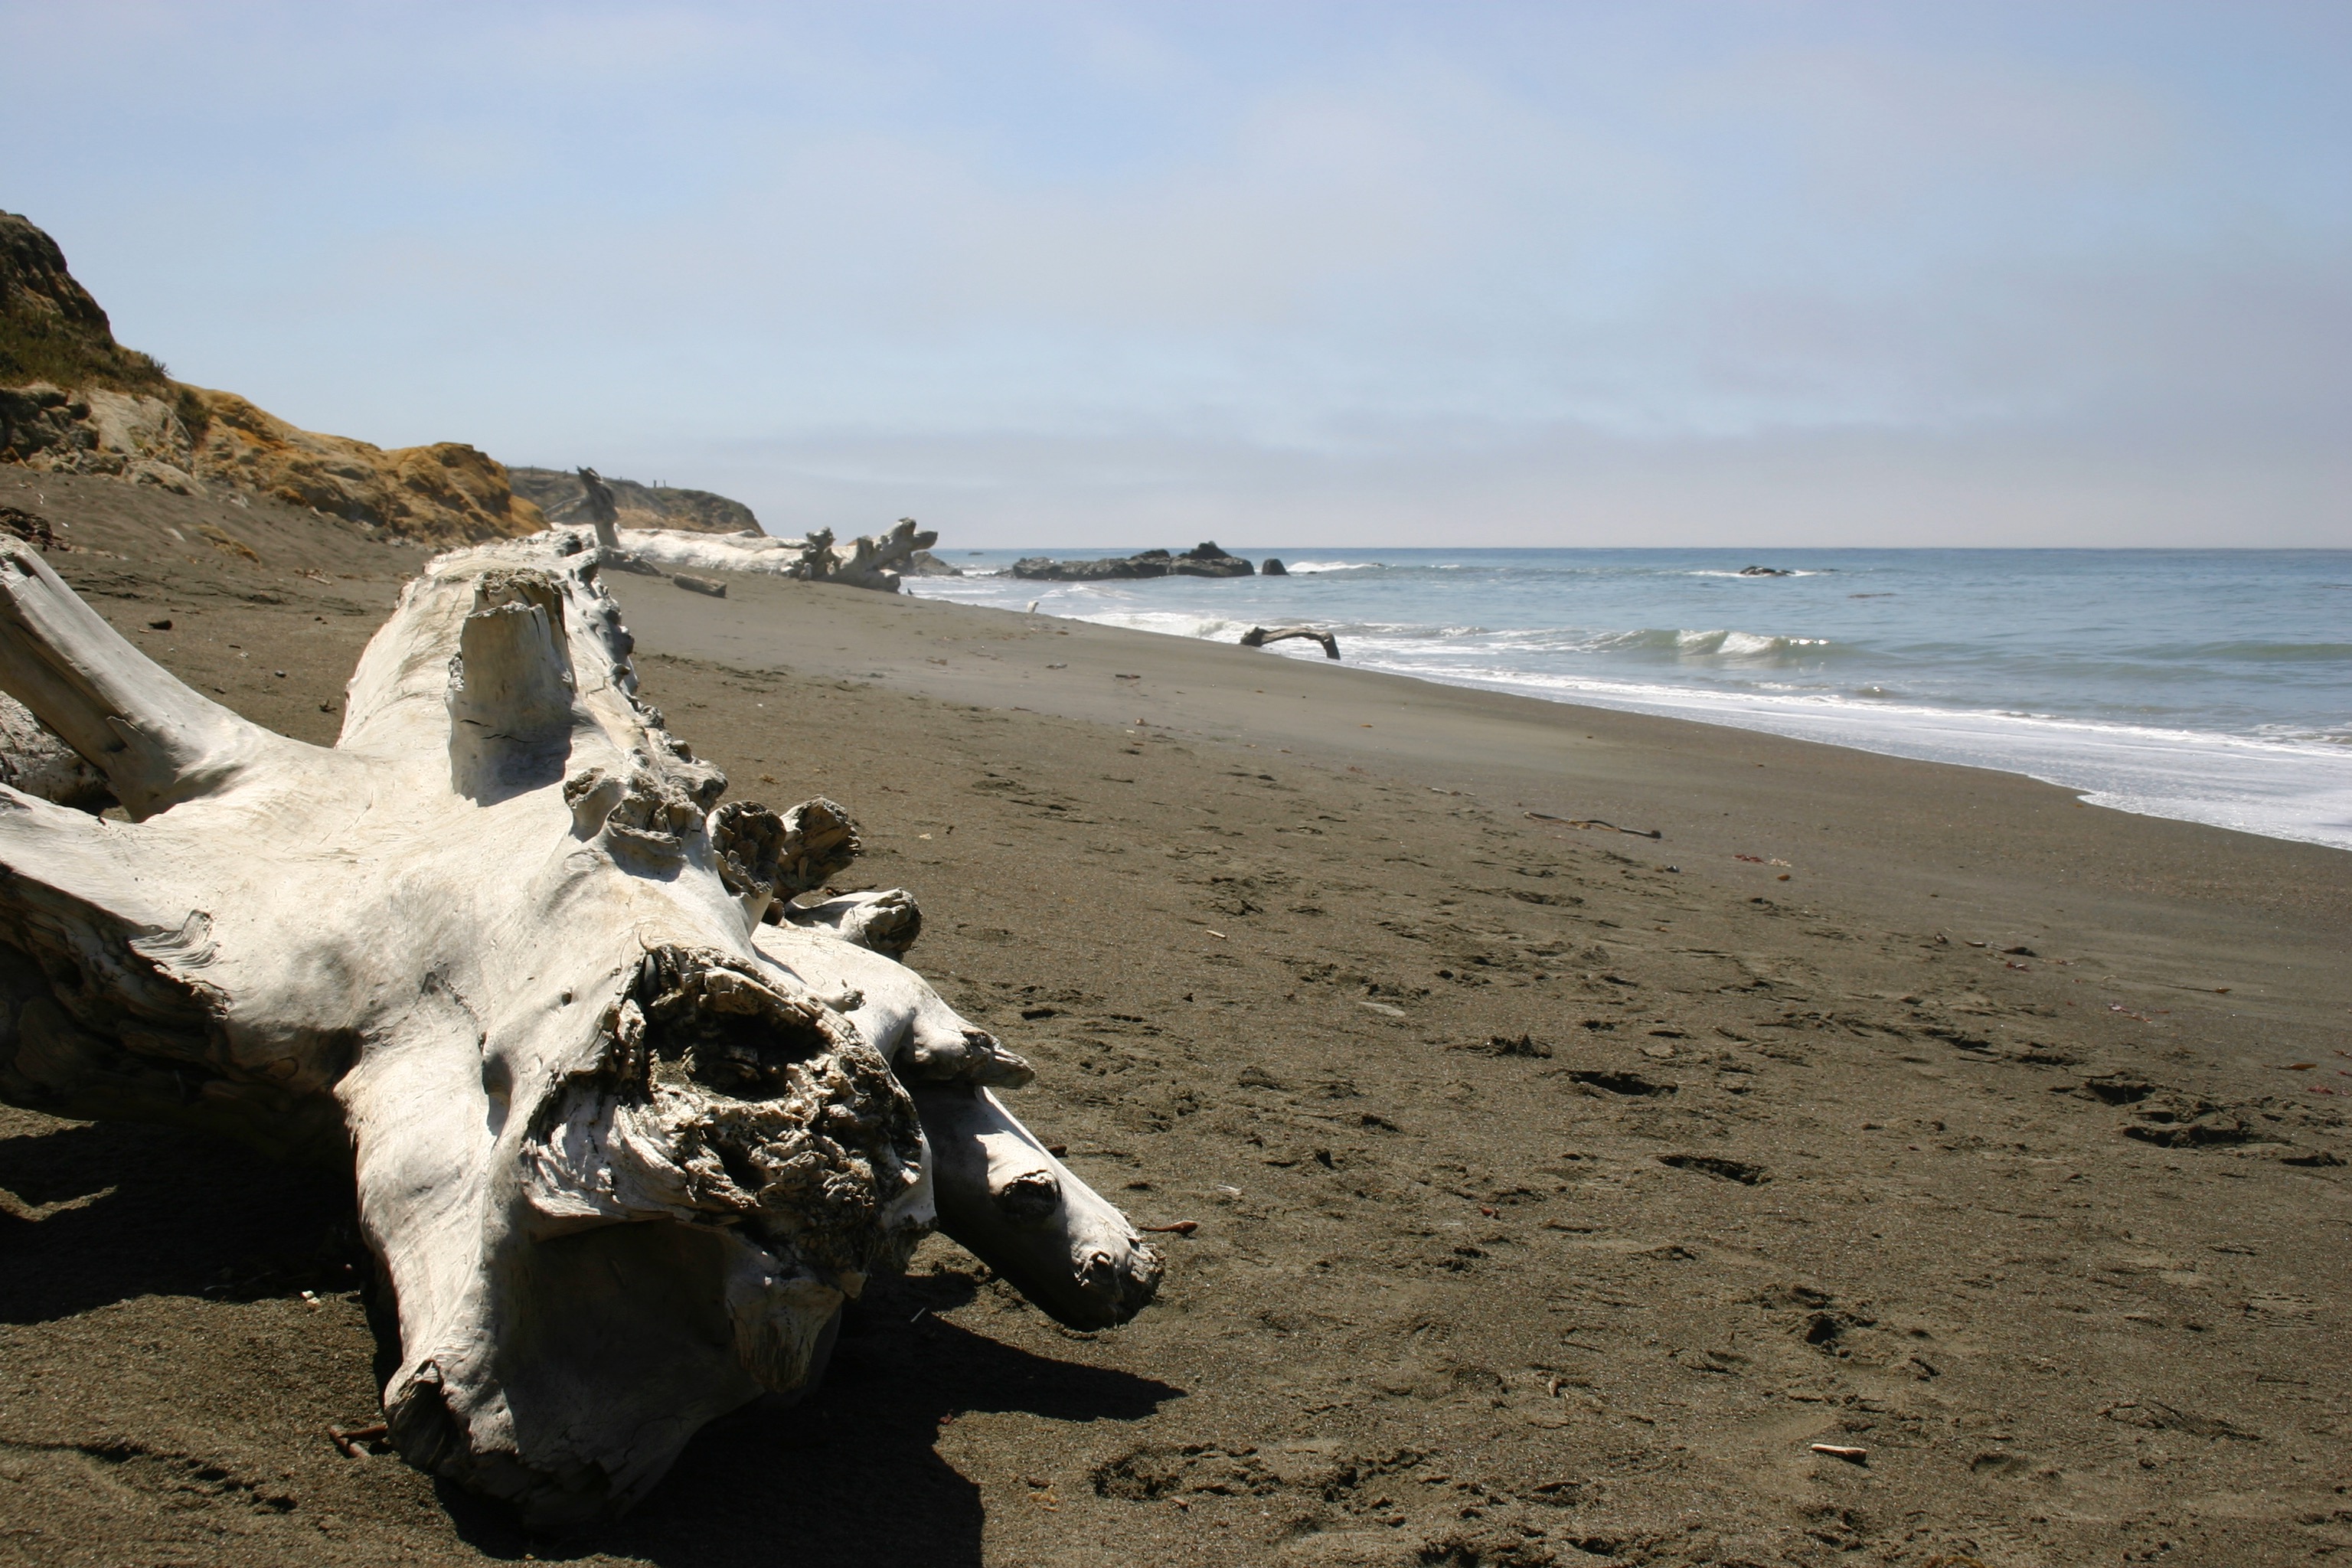 Sun-bleached driftwood log on the beach. 